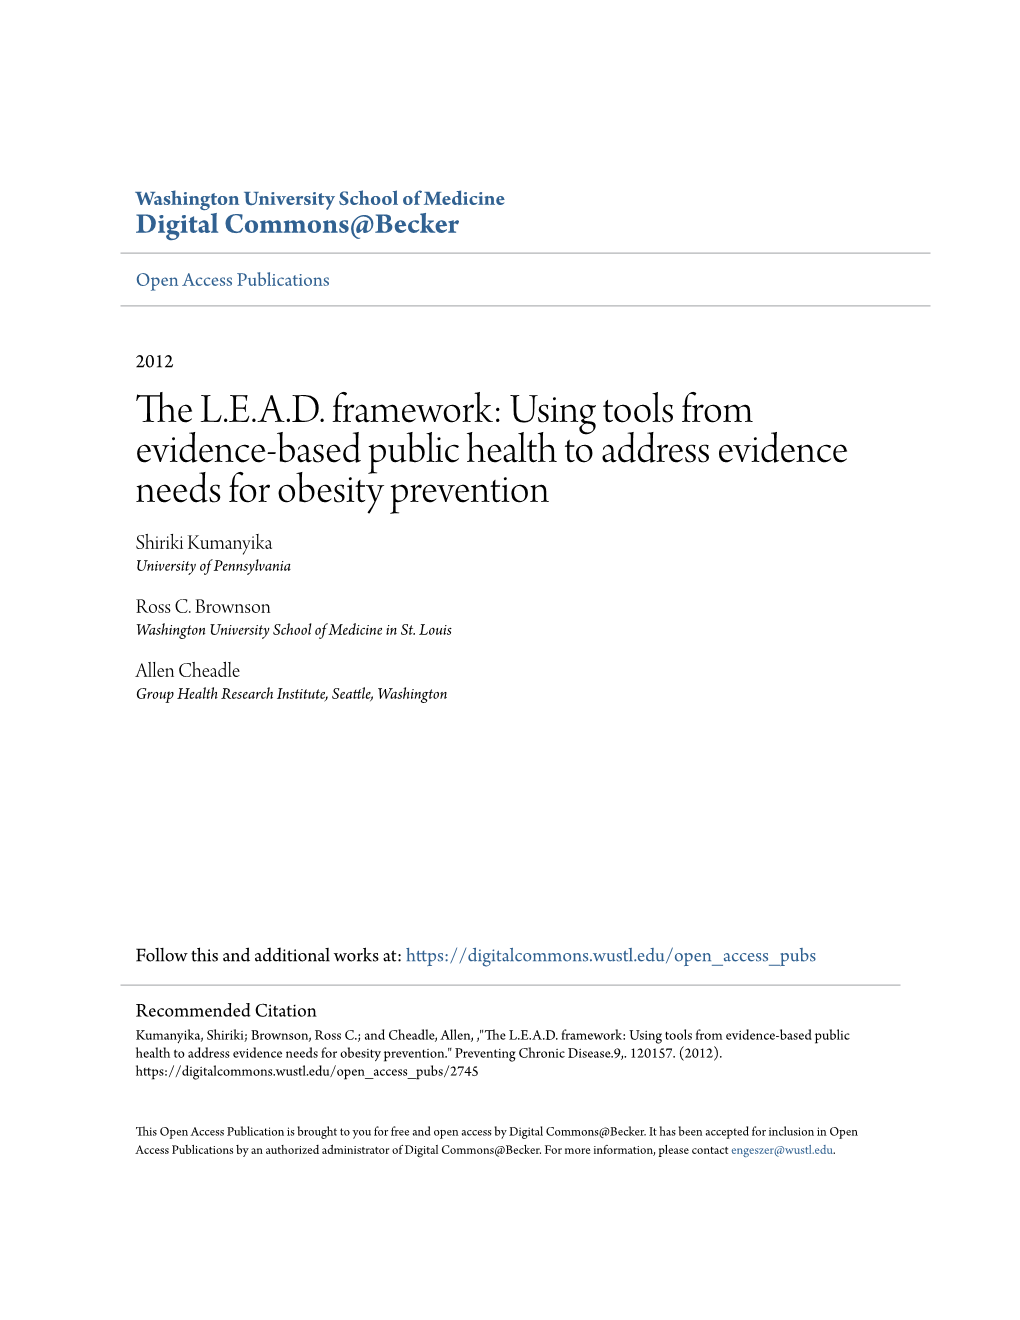 The L.E.A.D. Framework: Using Tools from Evidence-Based Public Health to Address Evidence Needs for Obesity Prevention Shiriki Kumanyika University of Pennsylvania